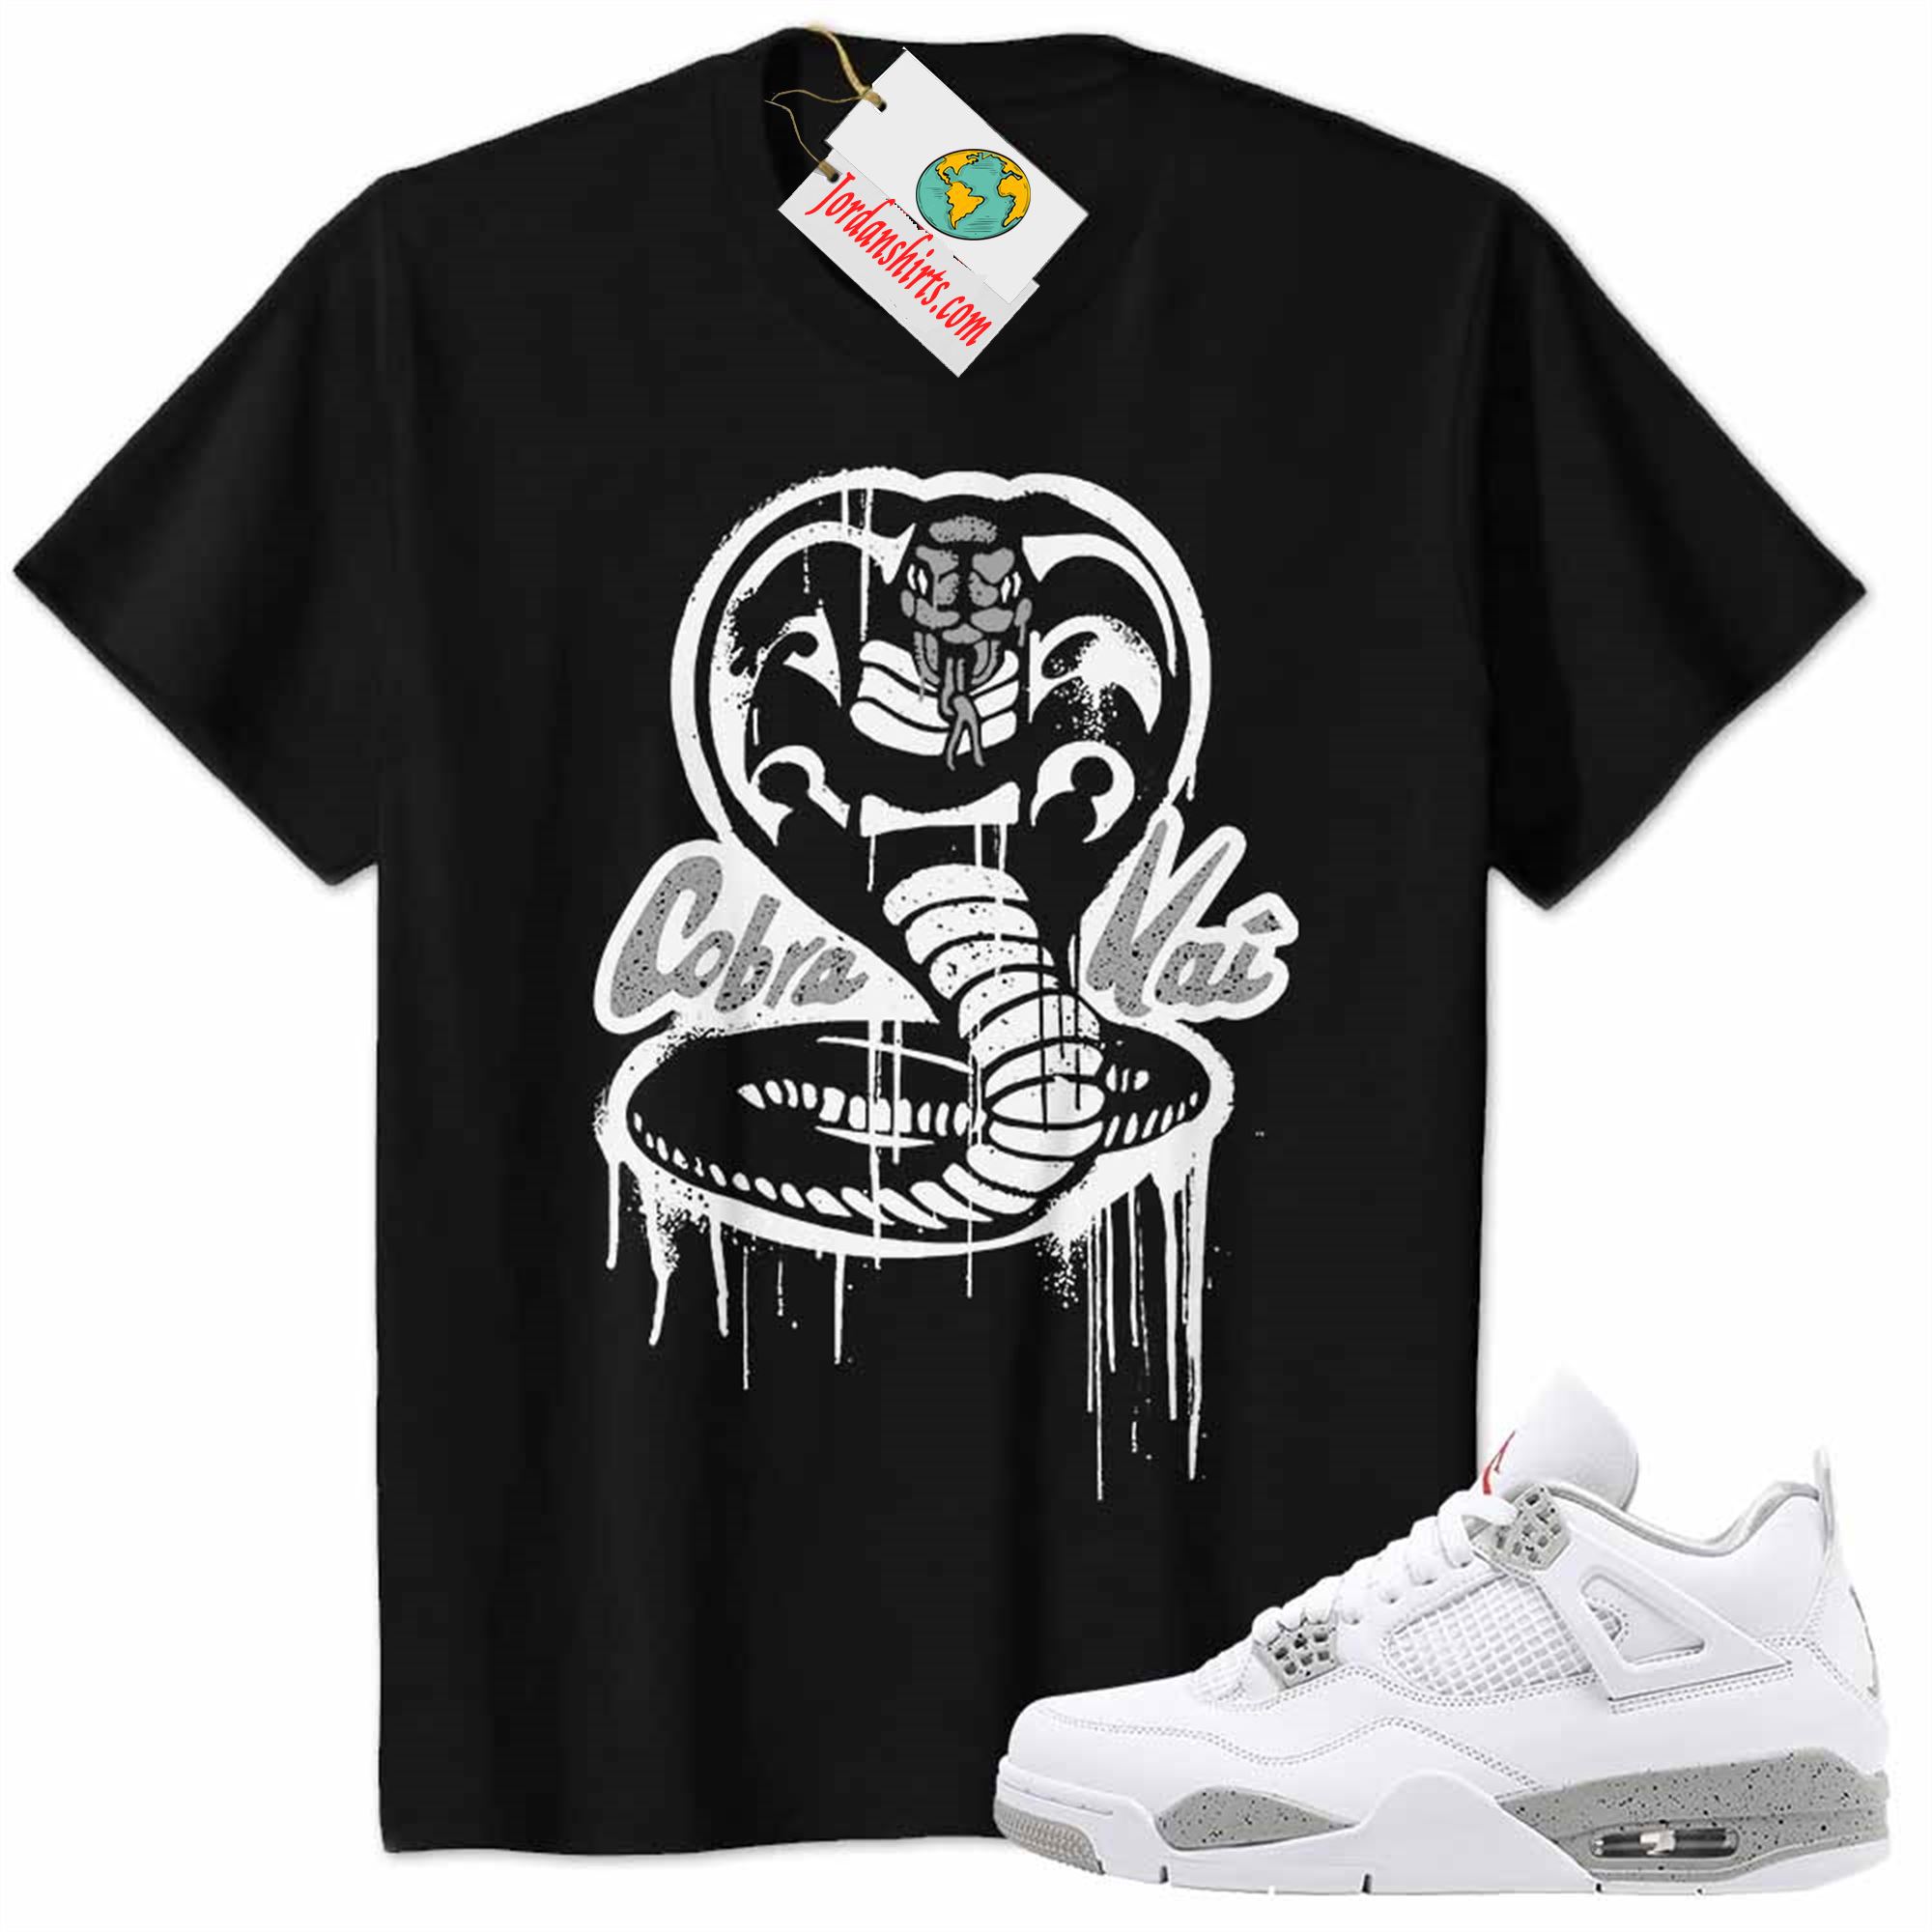 Jordan 4 Shirt, Cobra Kai No Mercy Melt Black Air Jordan 4 White Oreo 4s Full Size Up To 5xl